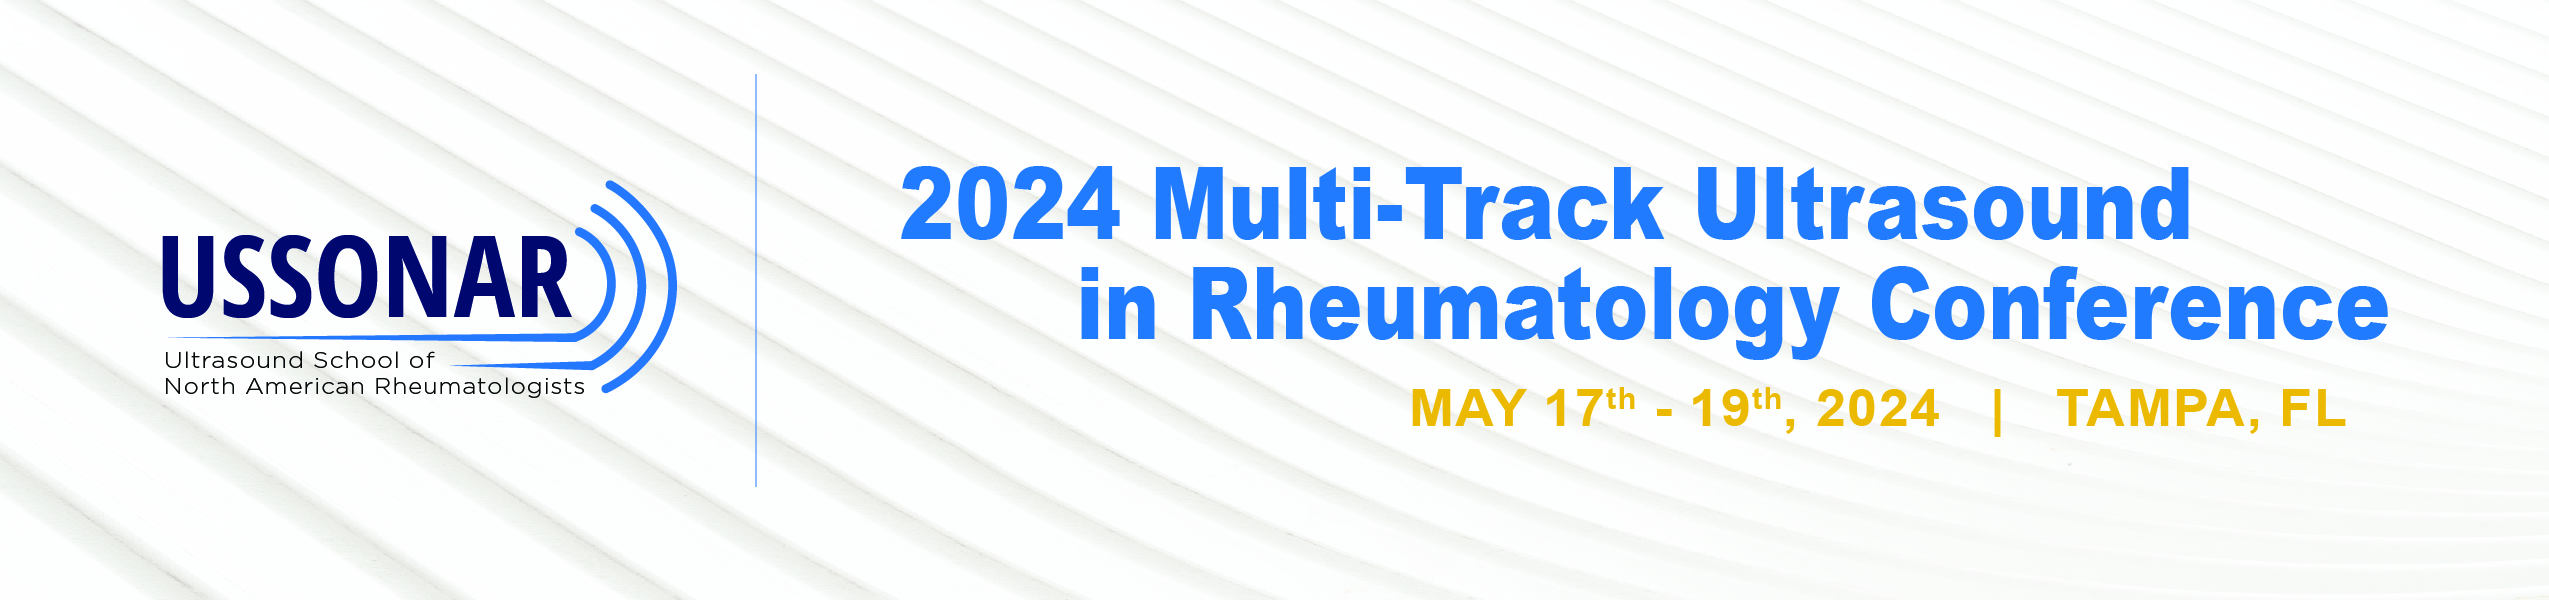 2024 USSONAR MultiTrack Ultrasound in Rheumatology Conference